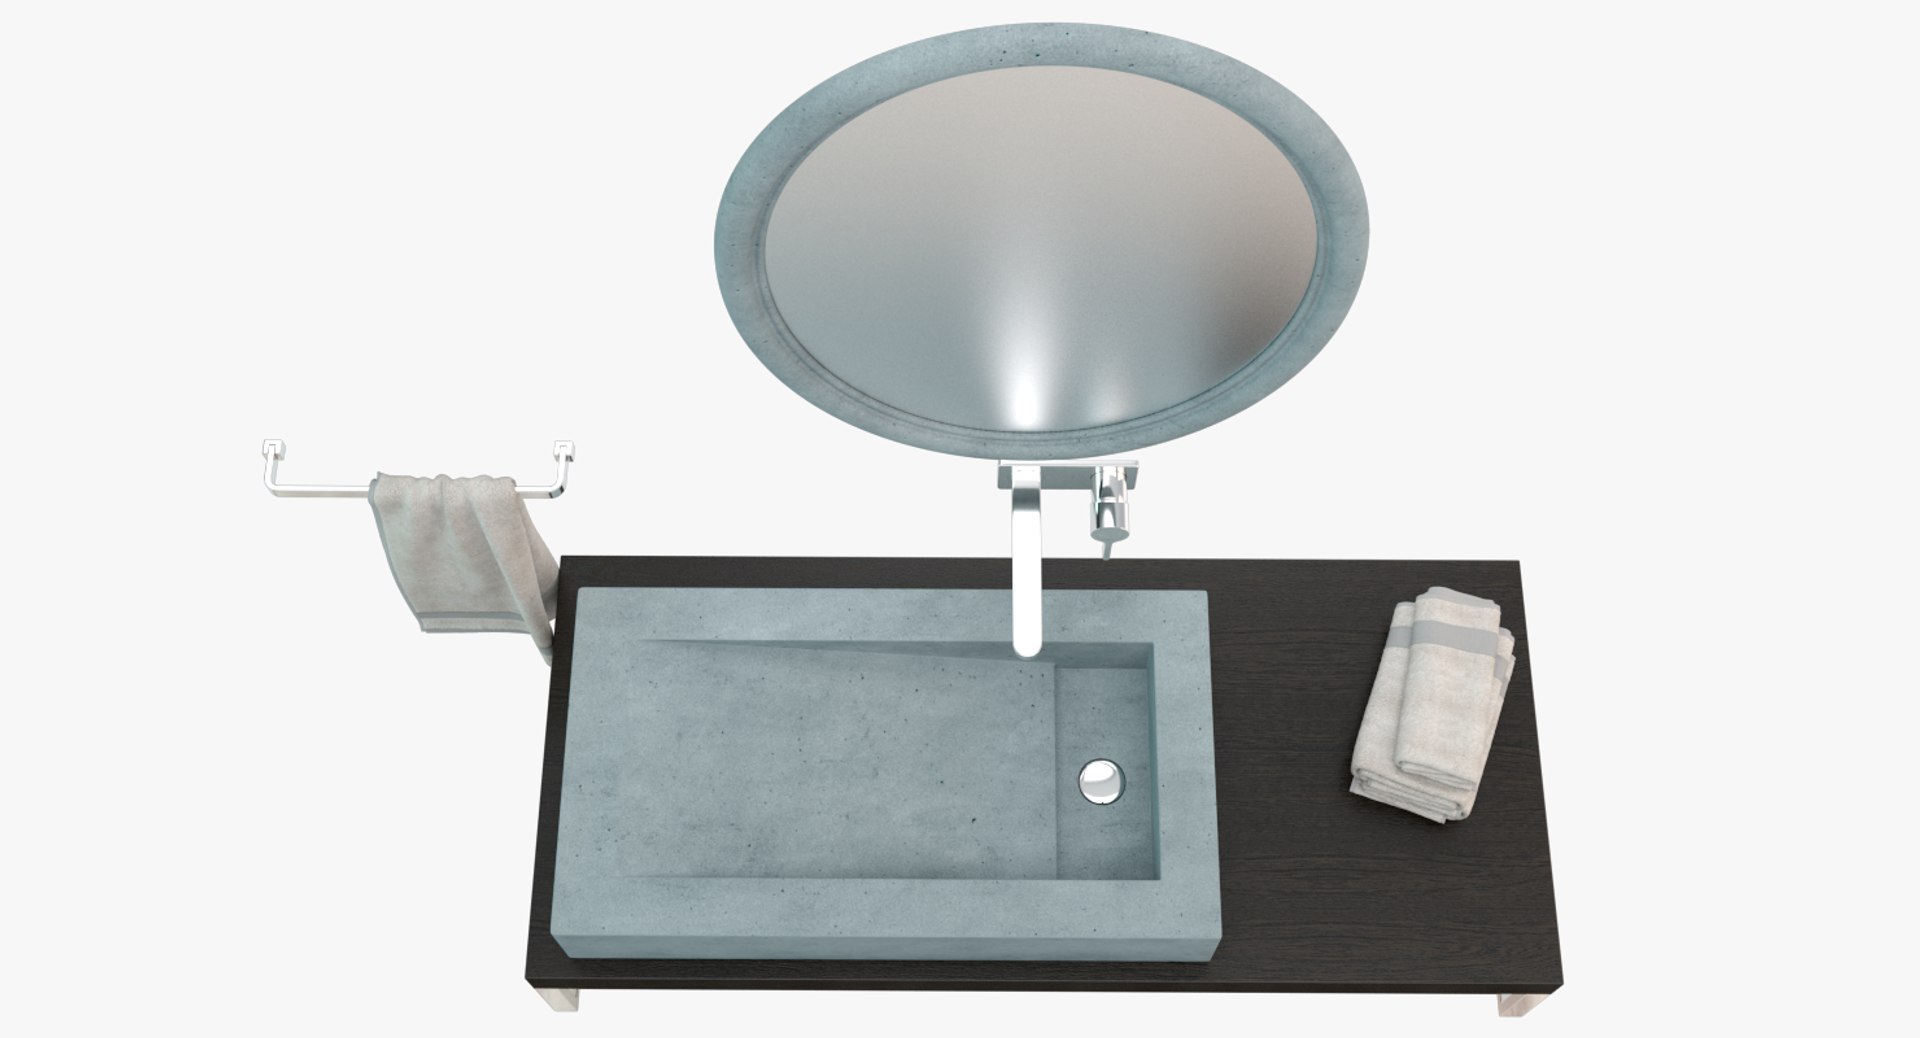 Concrete washbasin sink 3D model - TurboSquid 1394294